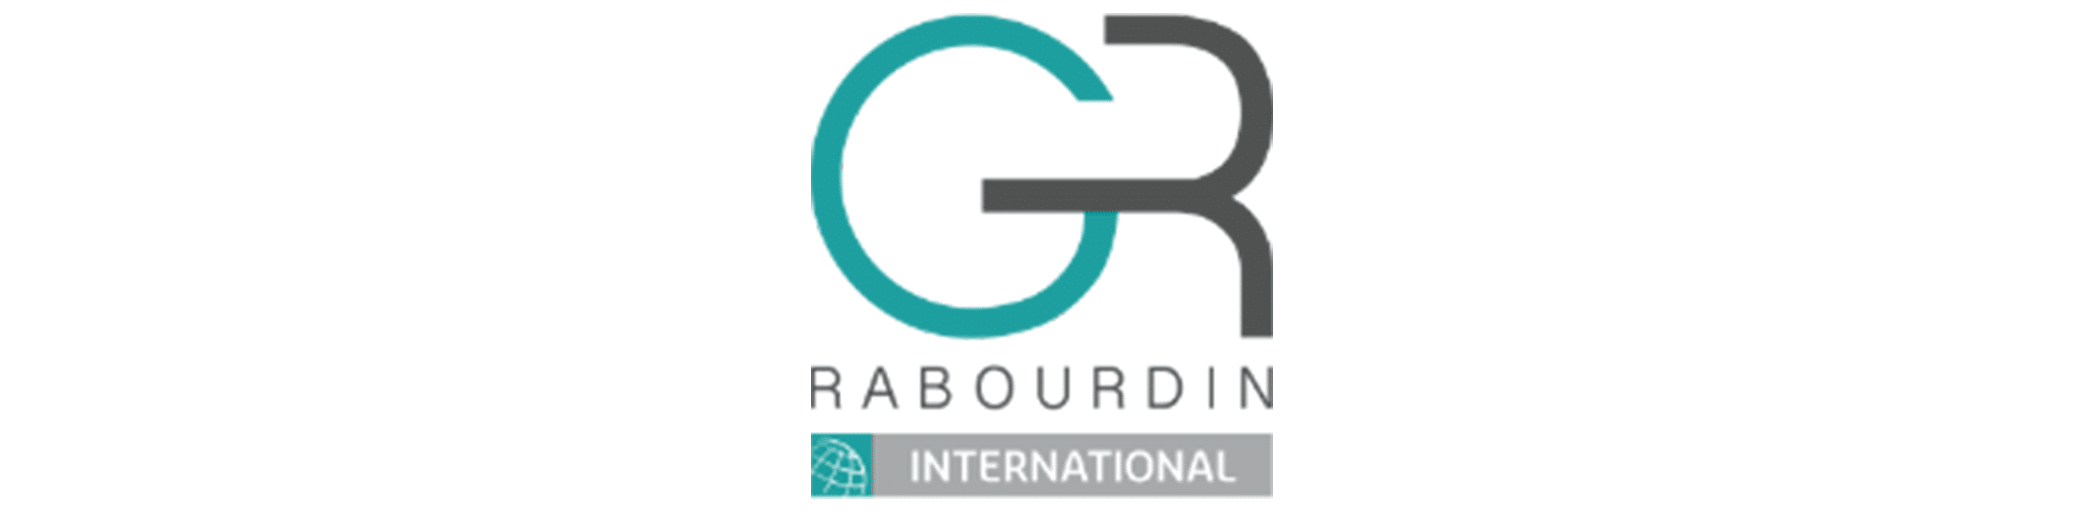 RABOURDIN INTERNATIONAL